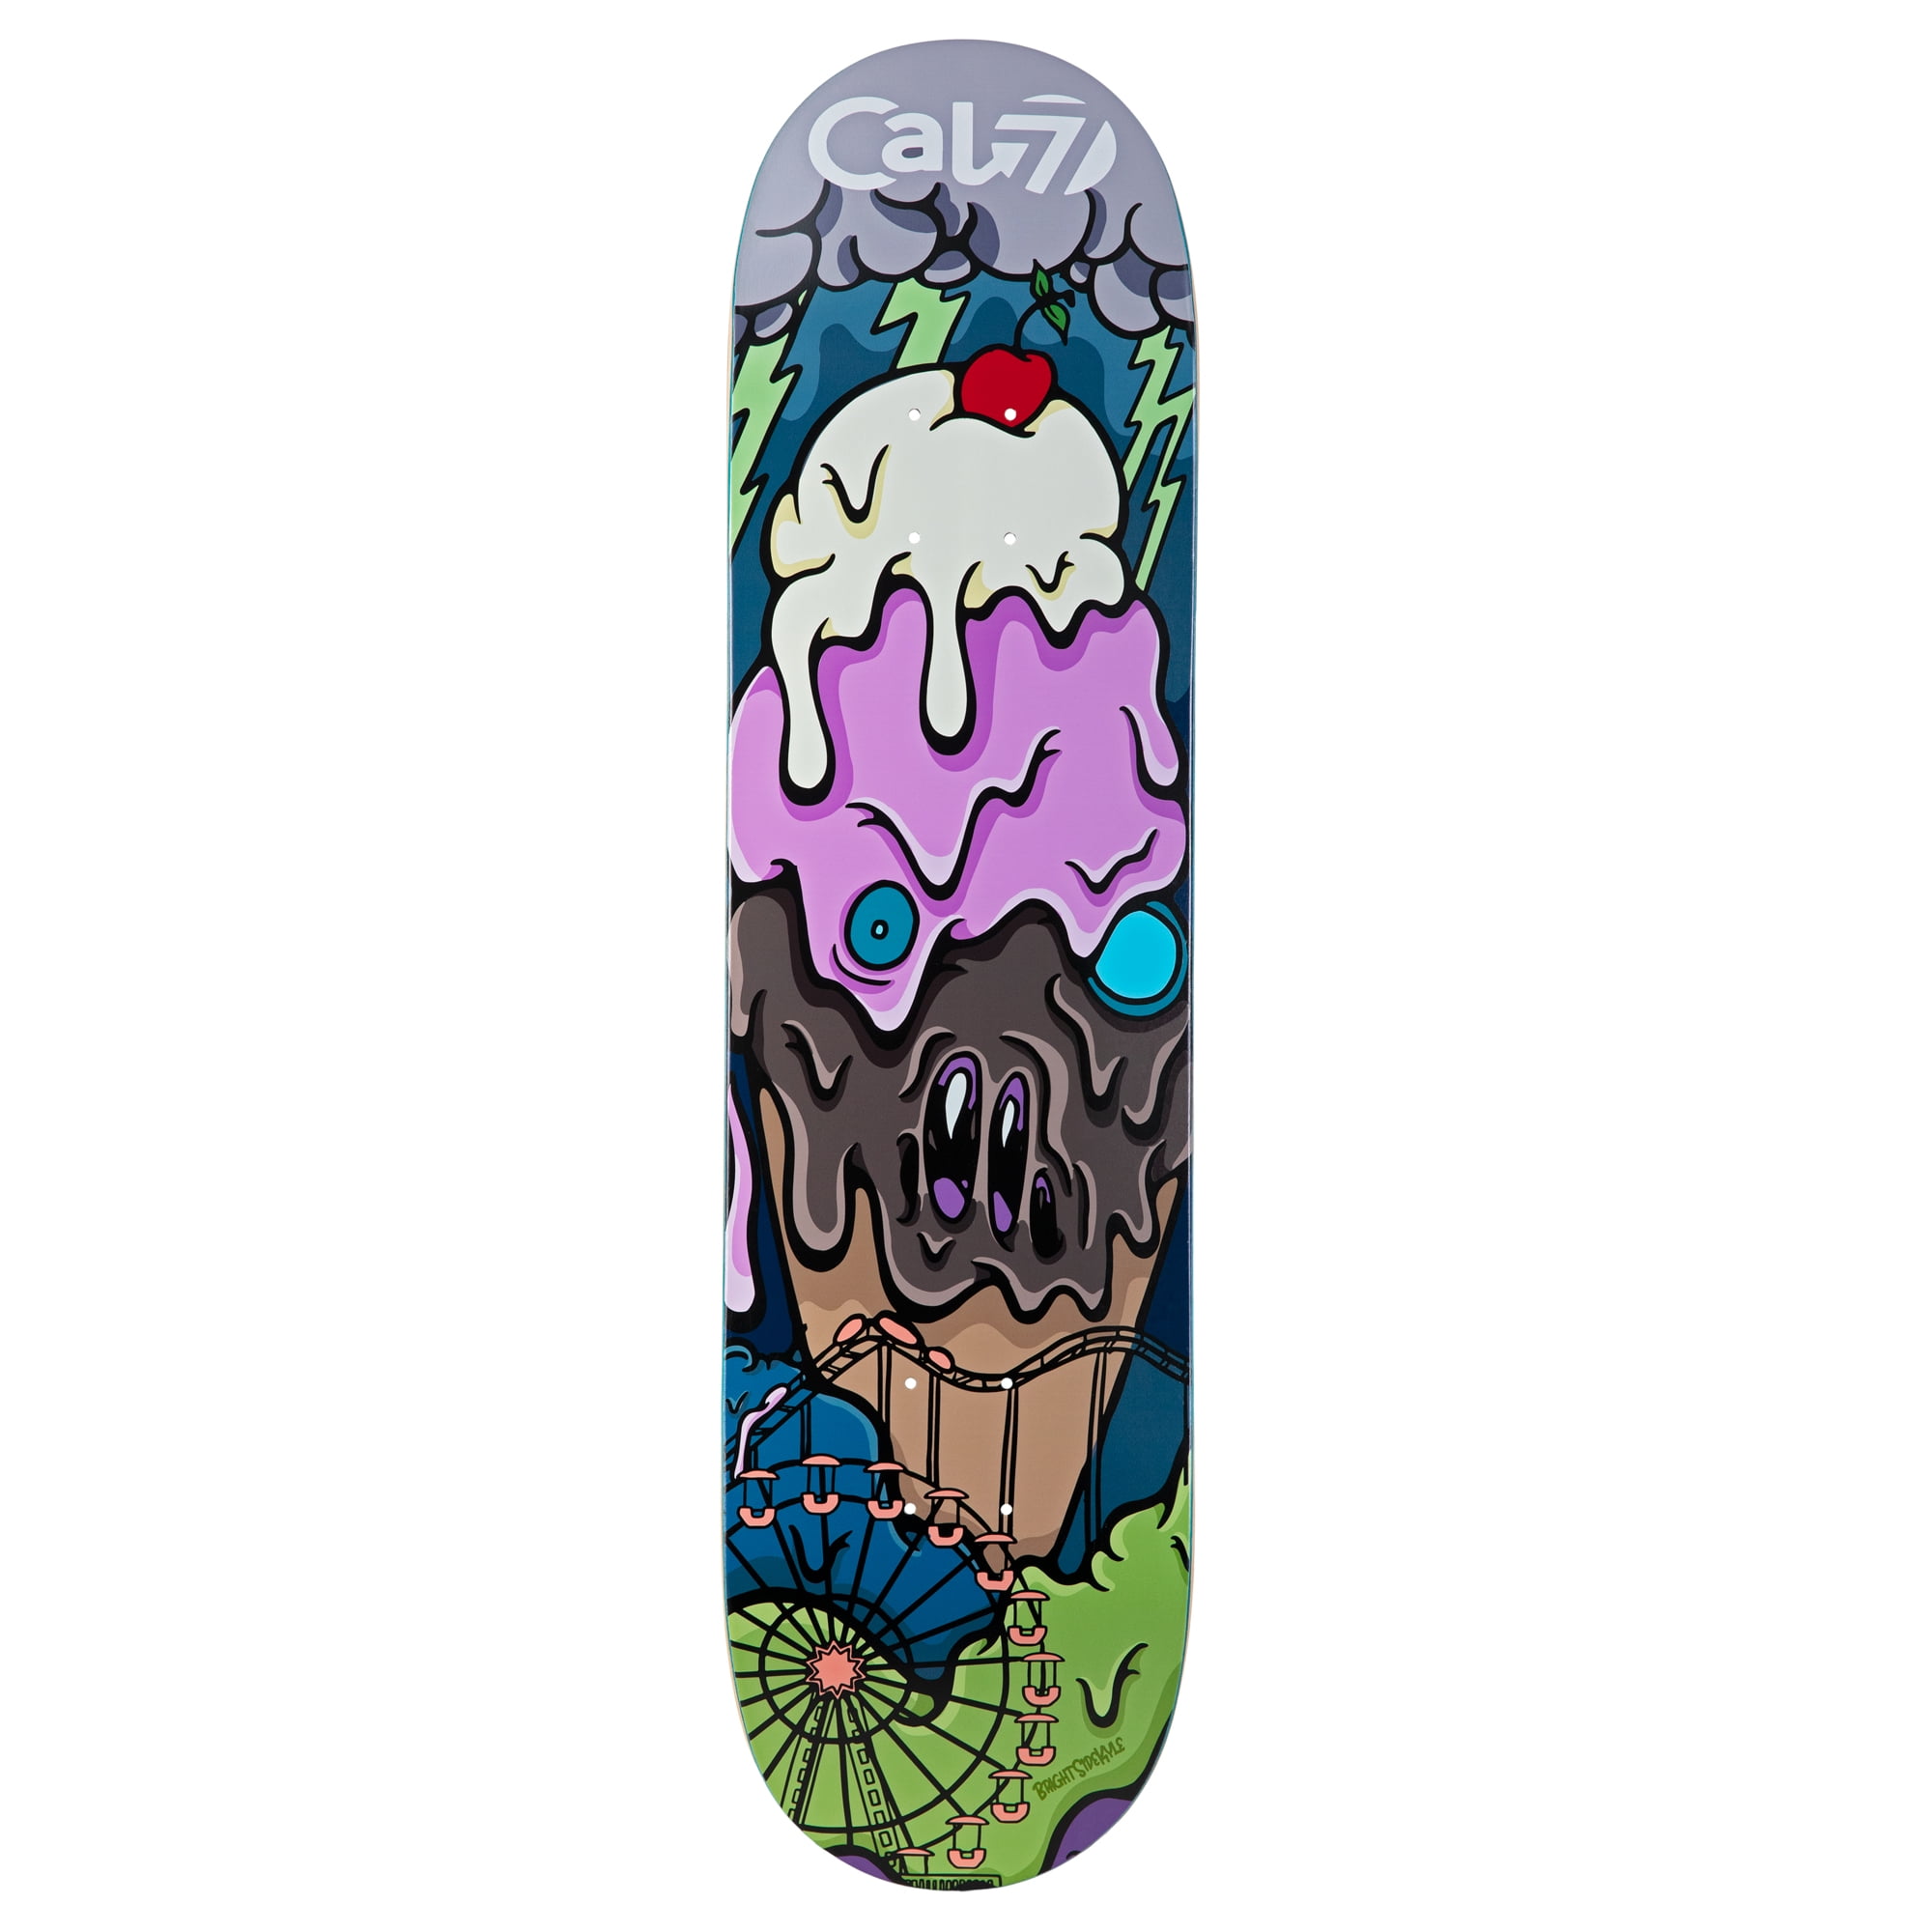 Cal 7 Monster Art Cold-Press Skateboard in 8.25" and 8.5" size (Scream, - Walmart.com